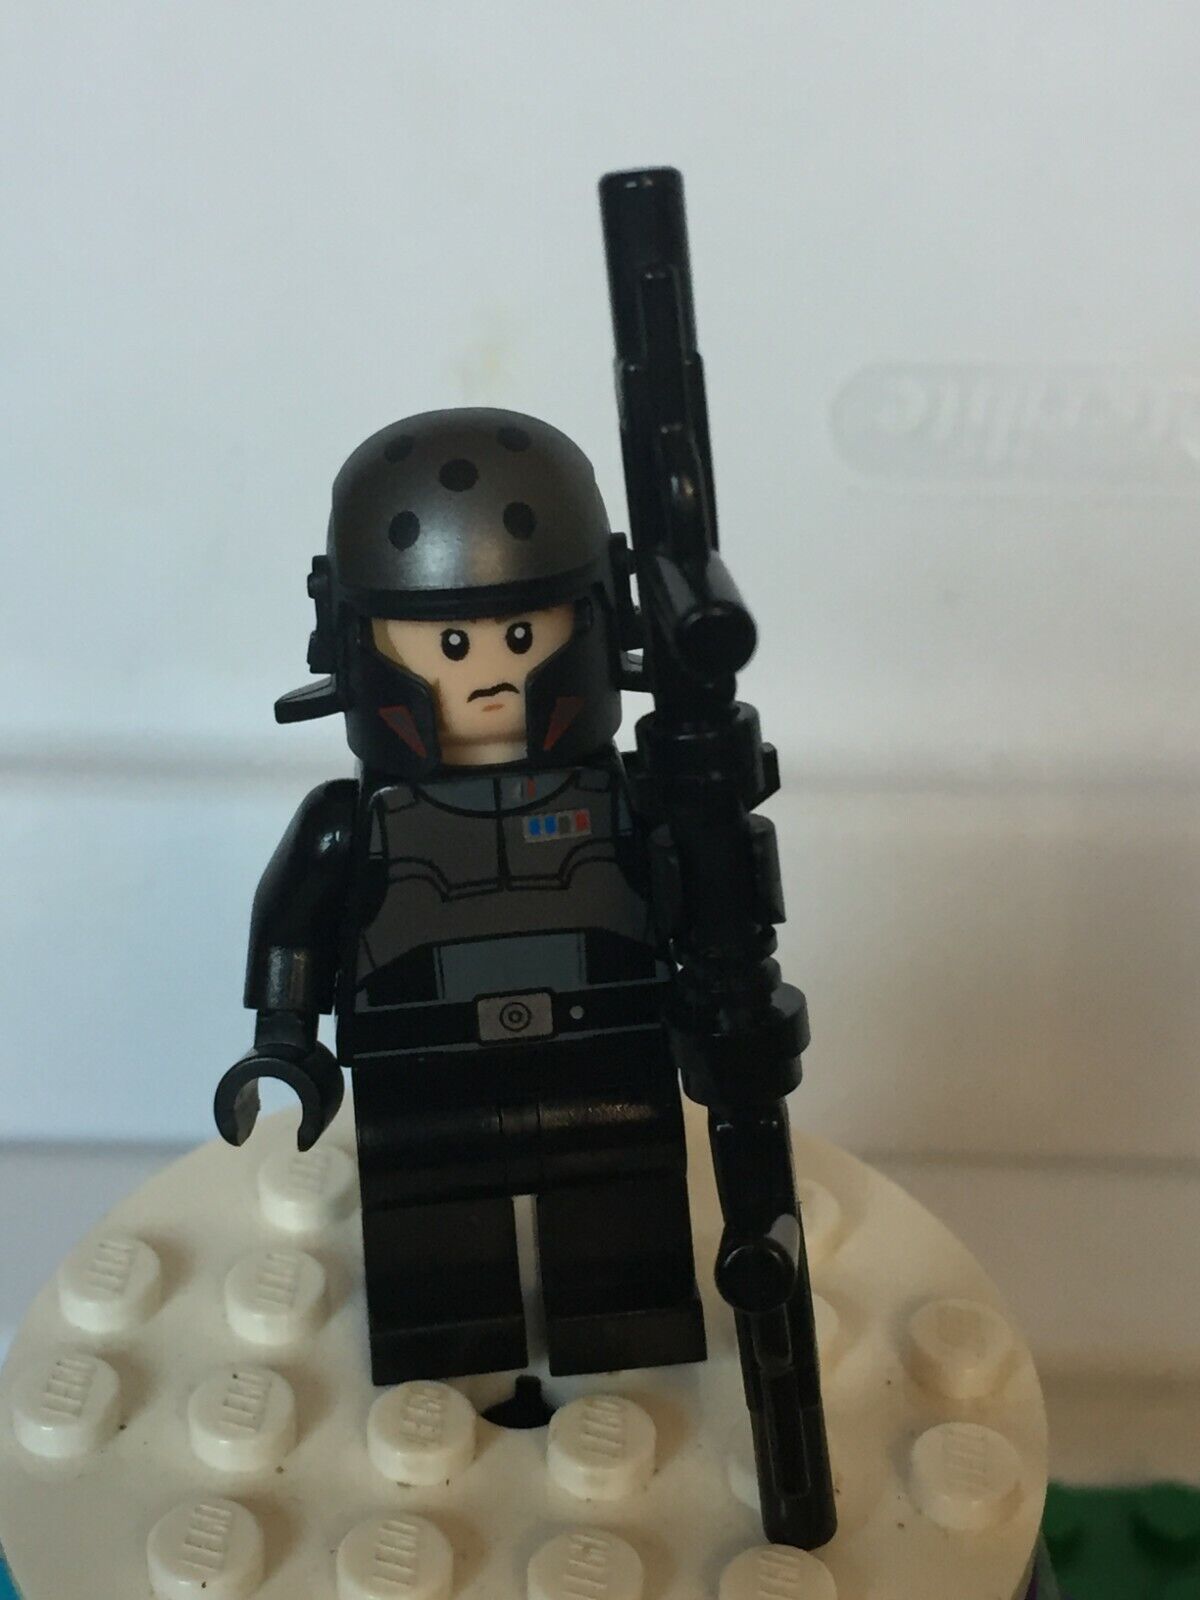 MINIFIGURE KIND:AGENT KALLUS 75083 75158:LEGO- STAR WARS- RESISTANCE & REBELS MINIFIGURES- YOU PICK FROM LIST- CHOOSE 